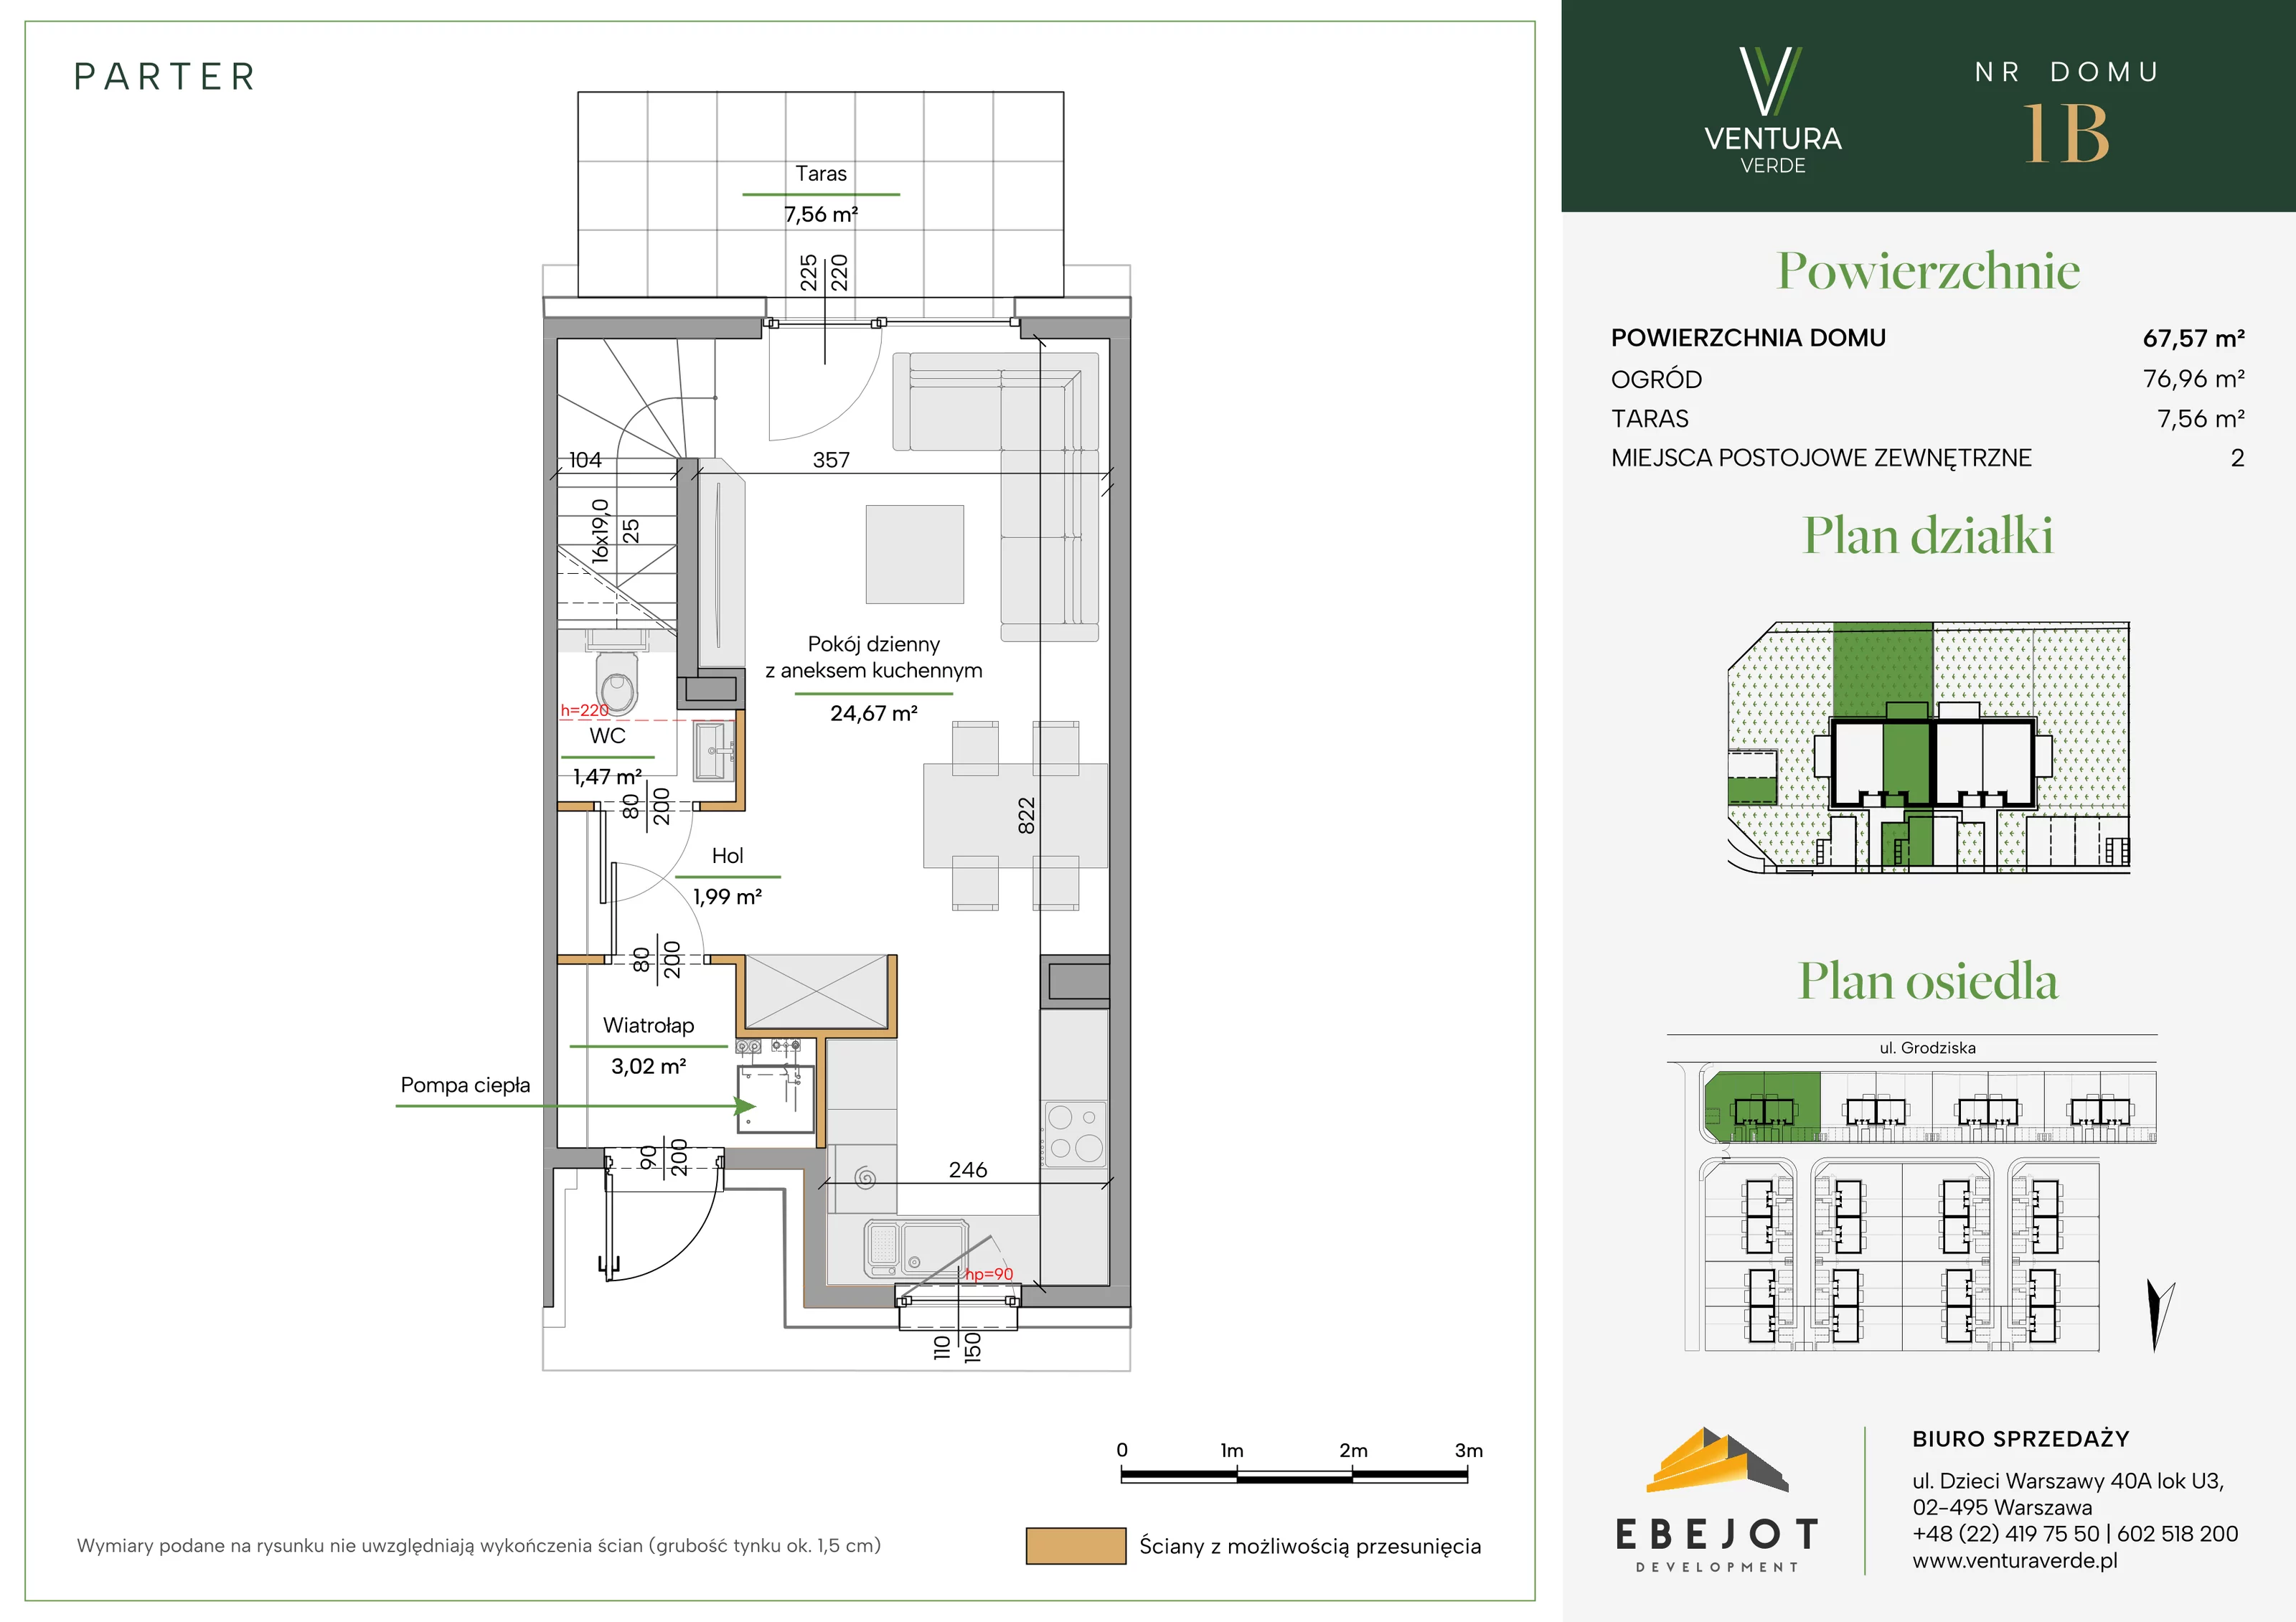 Dom 67,57 m², oferta nr 1B, Ventura Verde II, Stara Wieś, ul. Grodziska